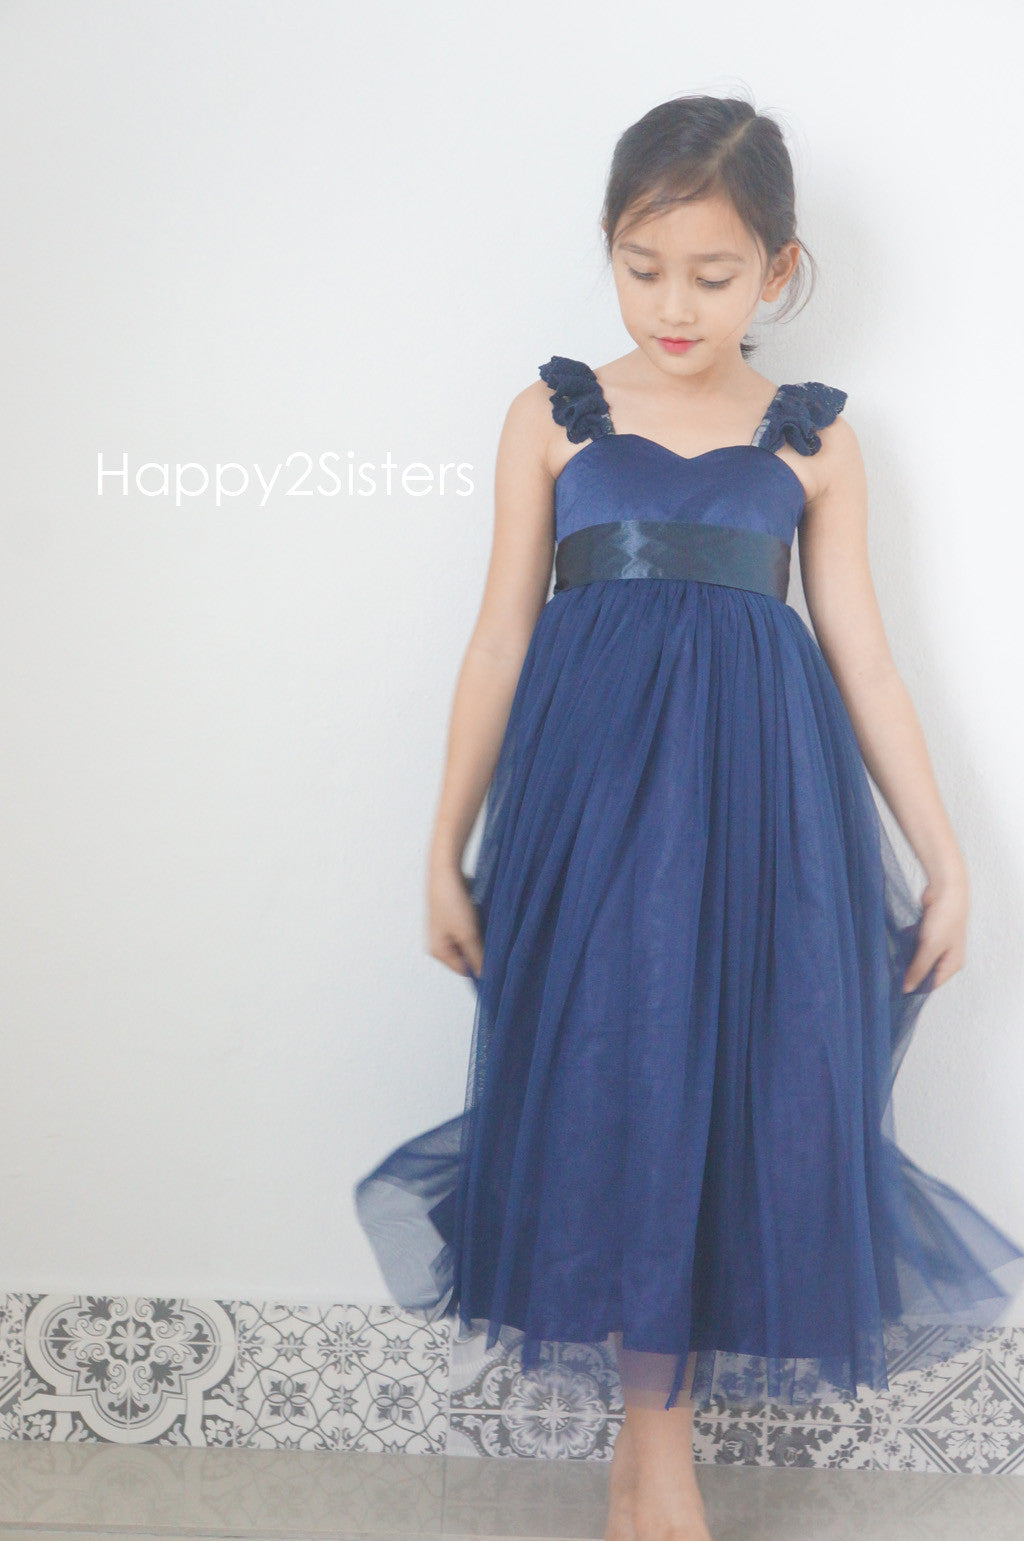 rustic blue dress